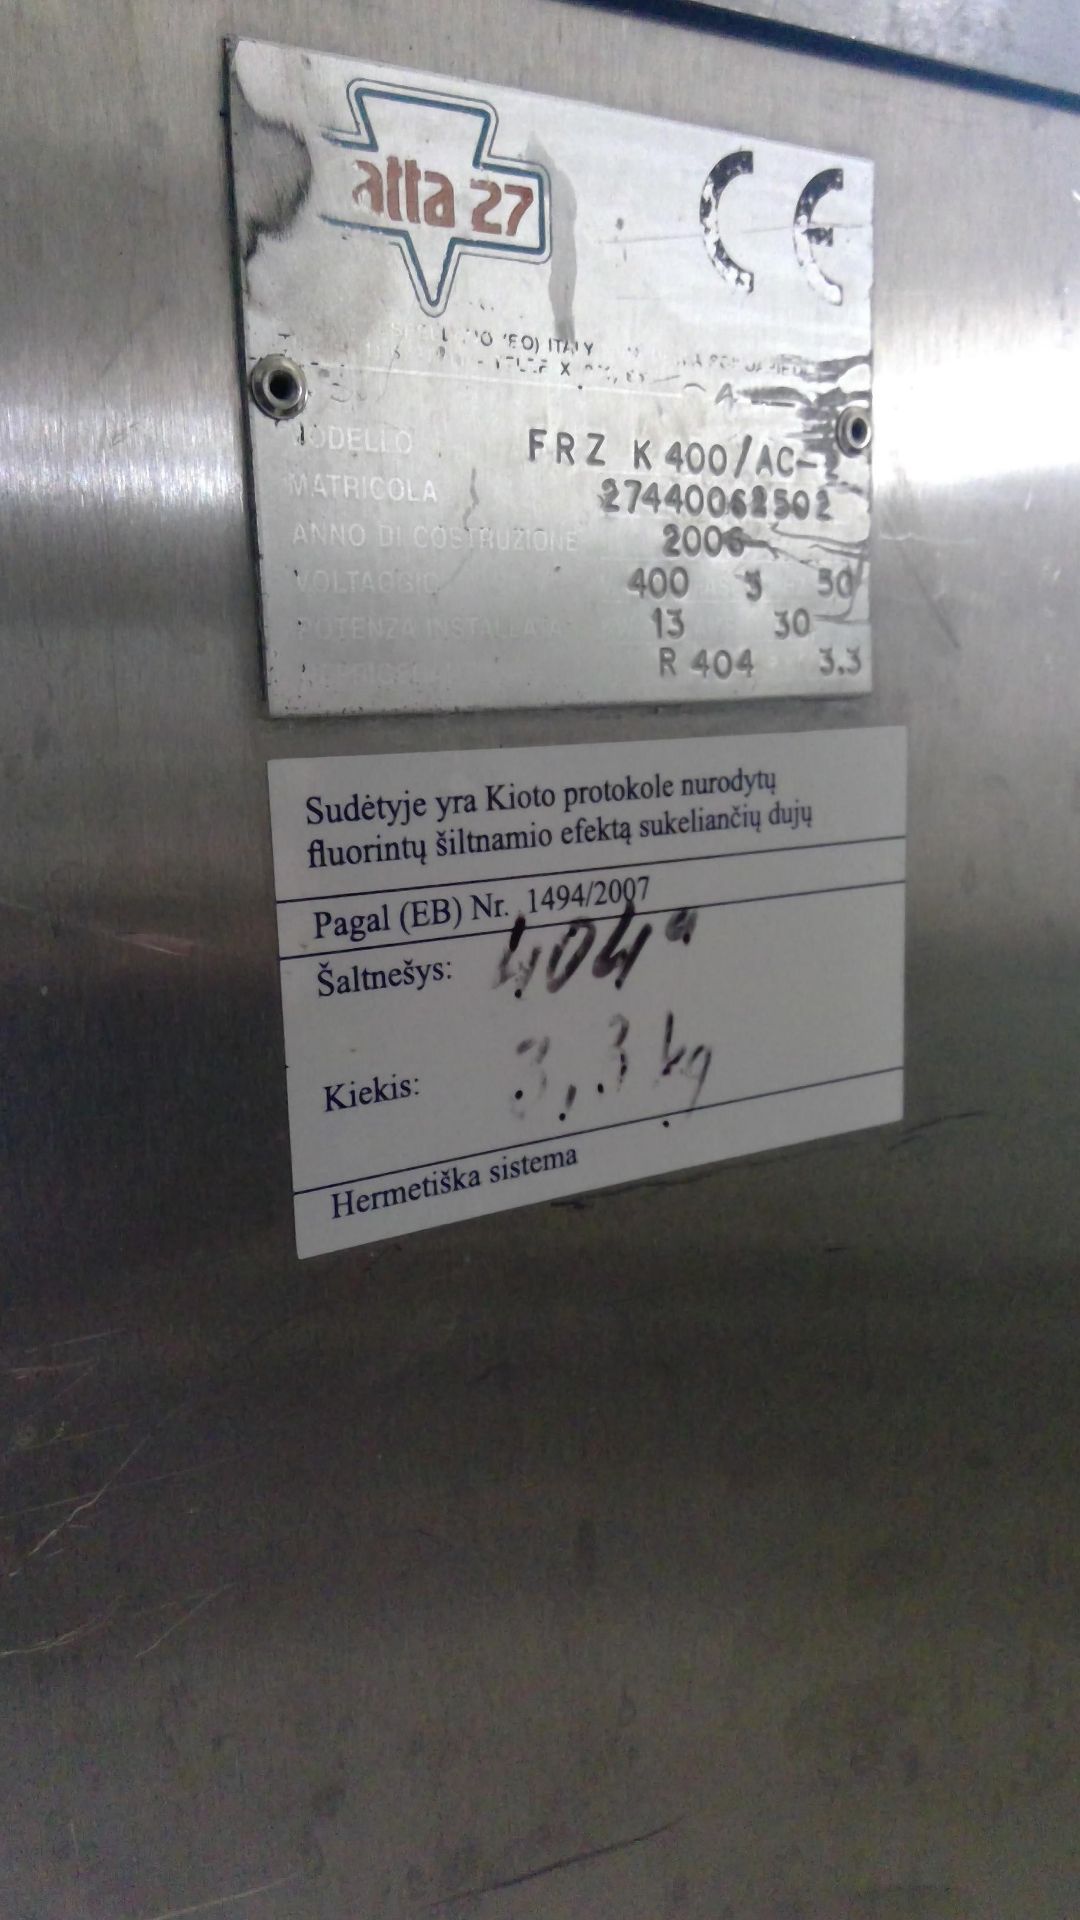 Catta 27 - Freezmat K 400 AC, freon. Ice cream production 200-400 ltr./h, 2006 - Image 4 of 13